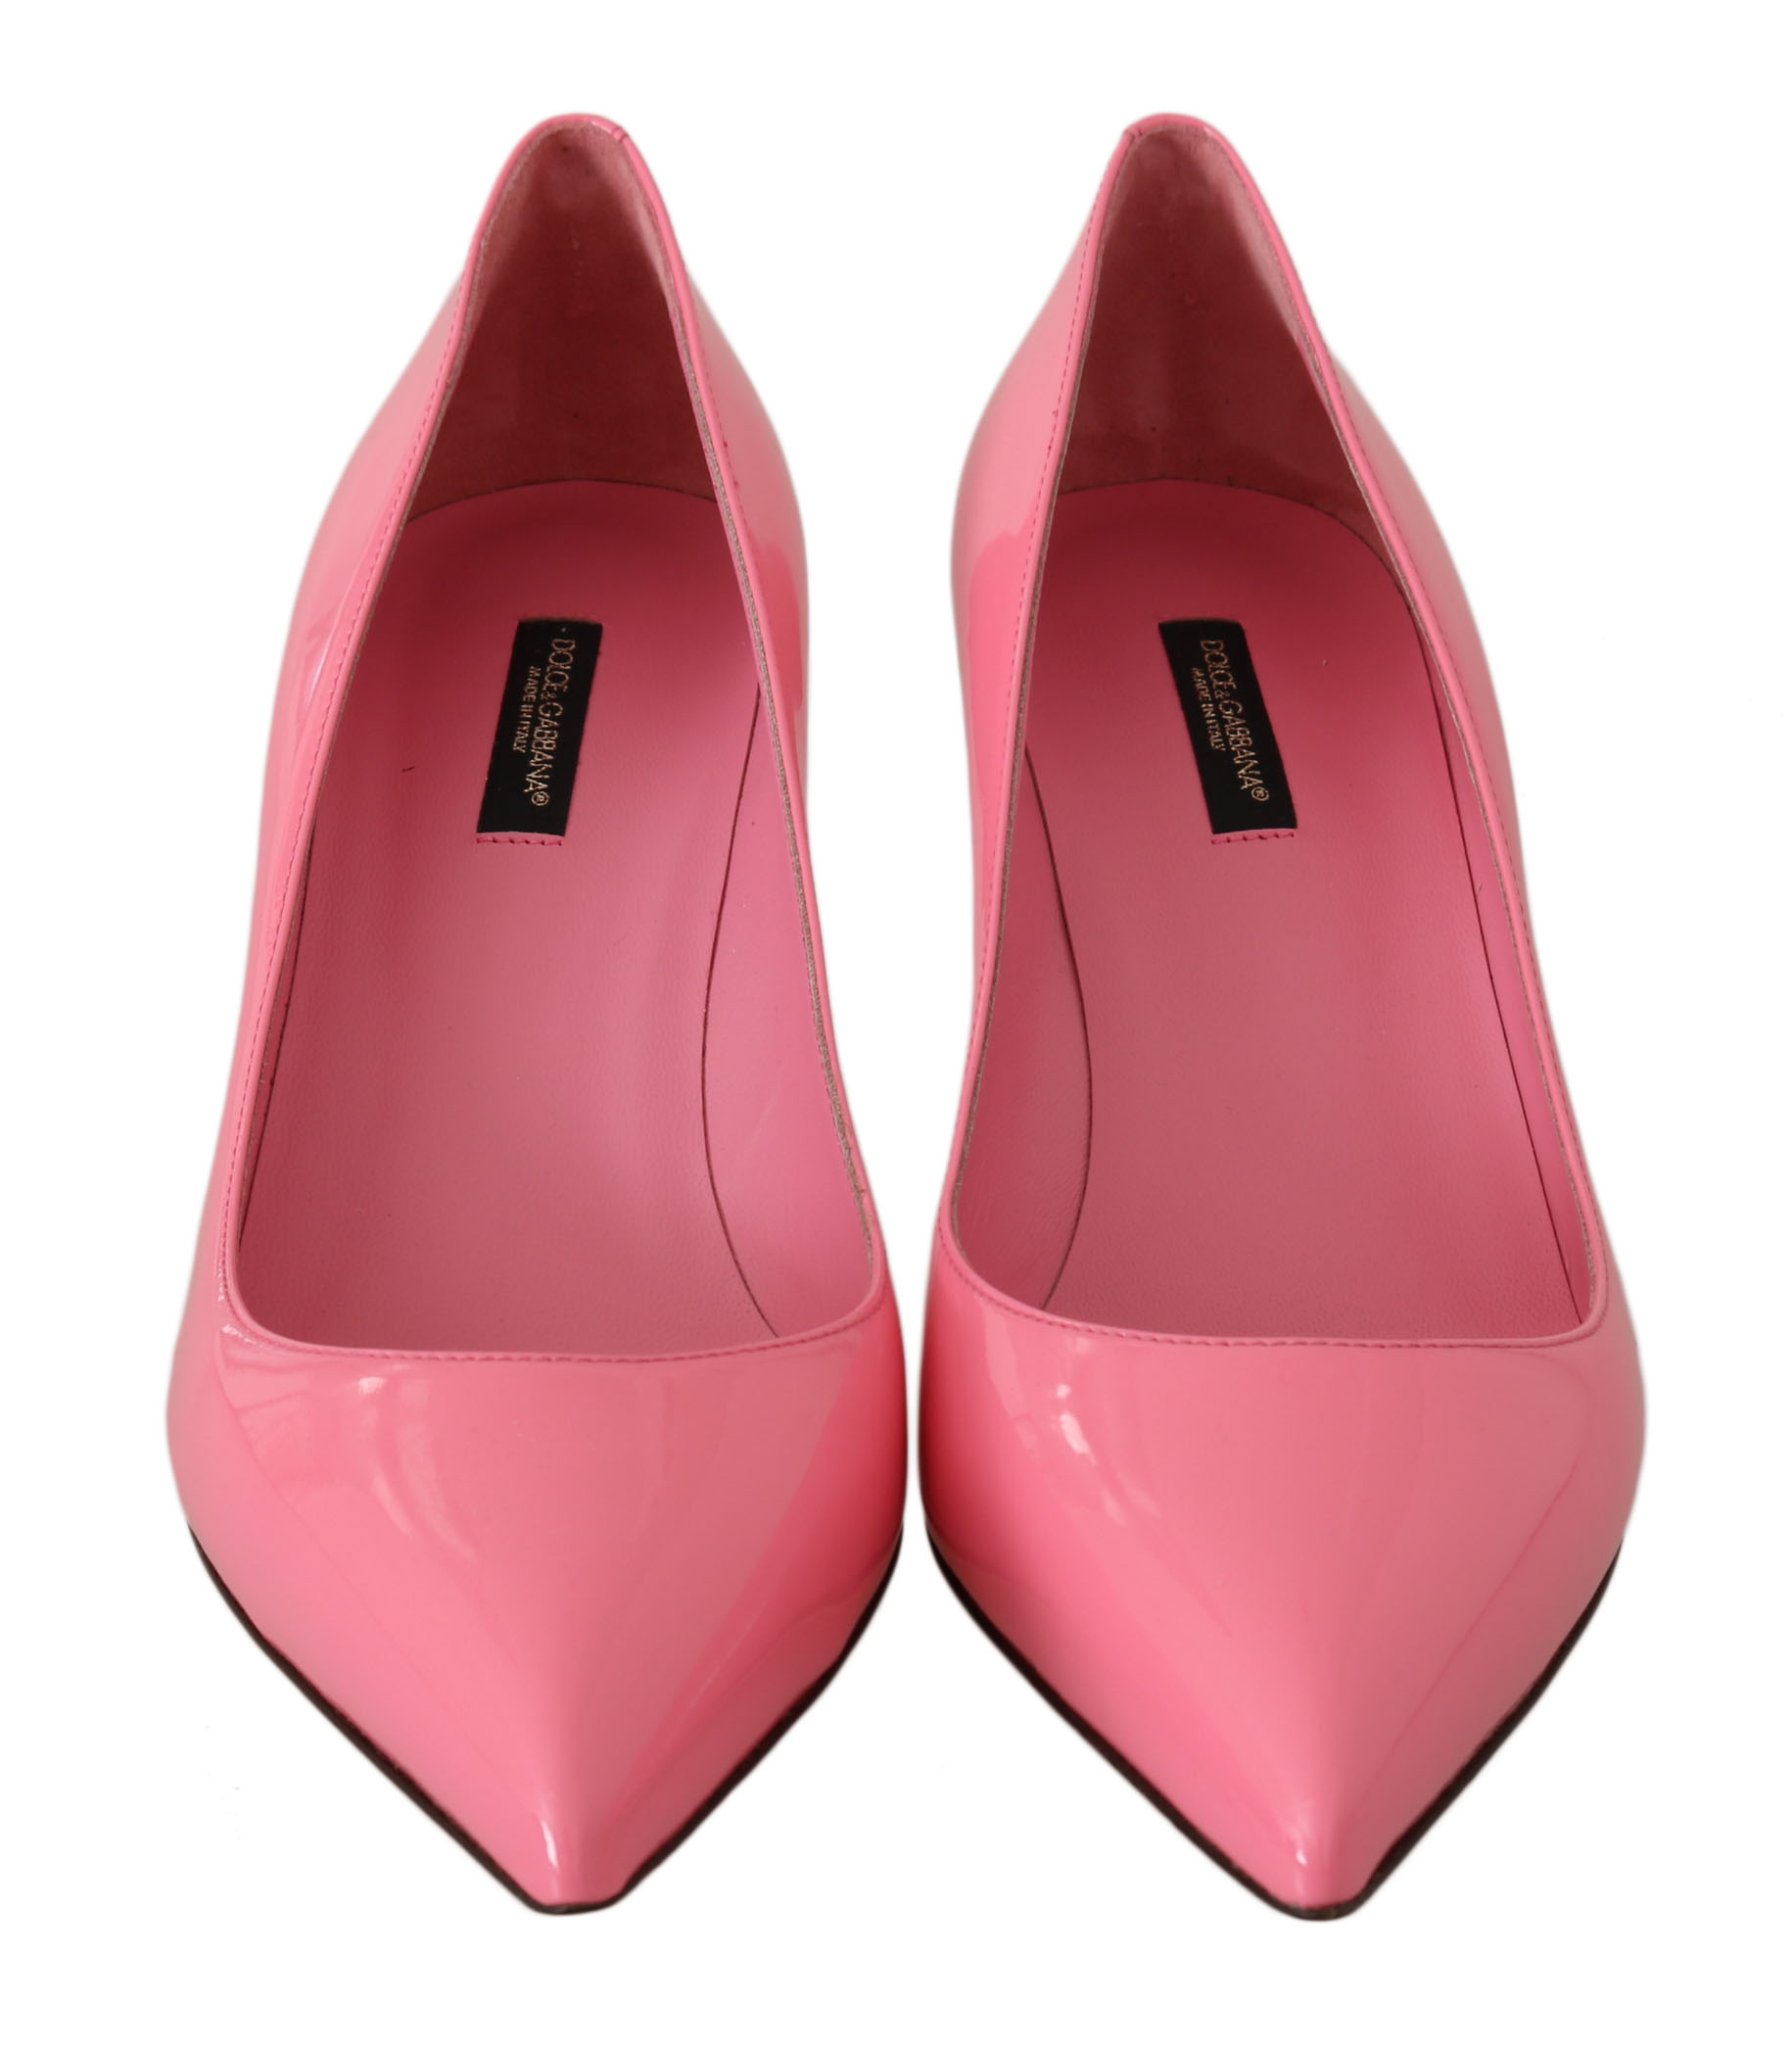 pink patent heels